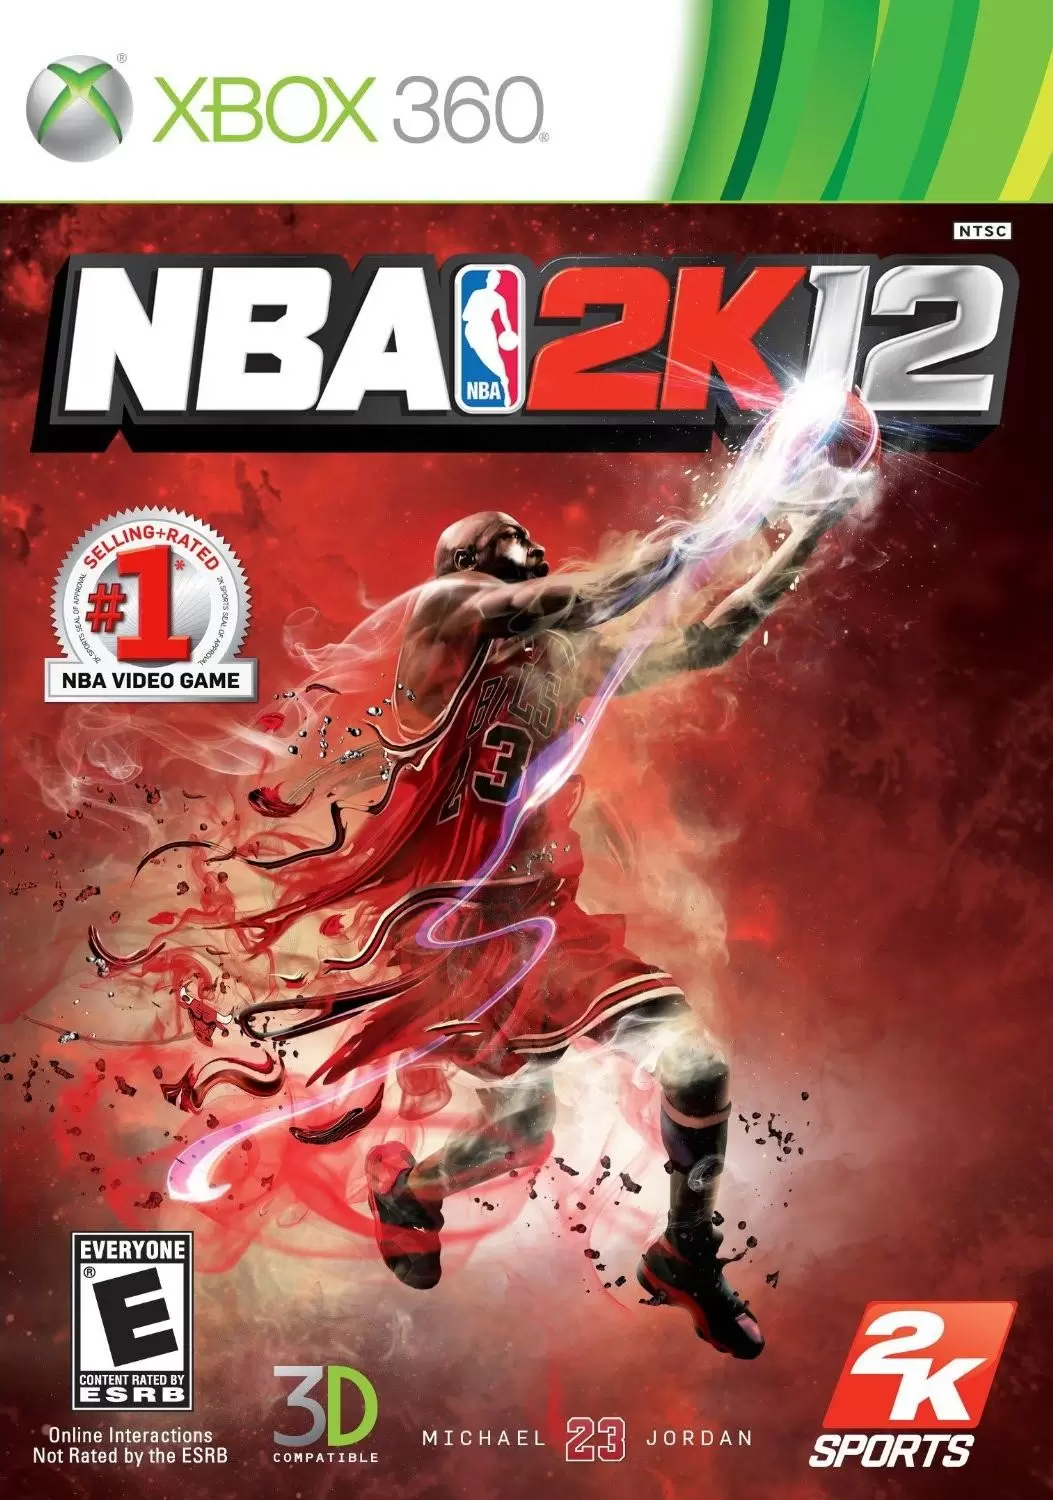 XBOX 360 Games - NBA 2K12